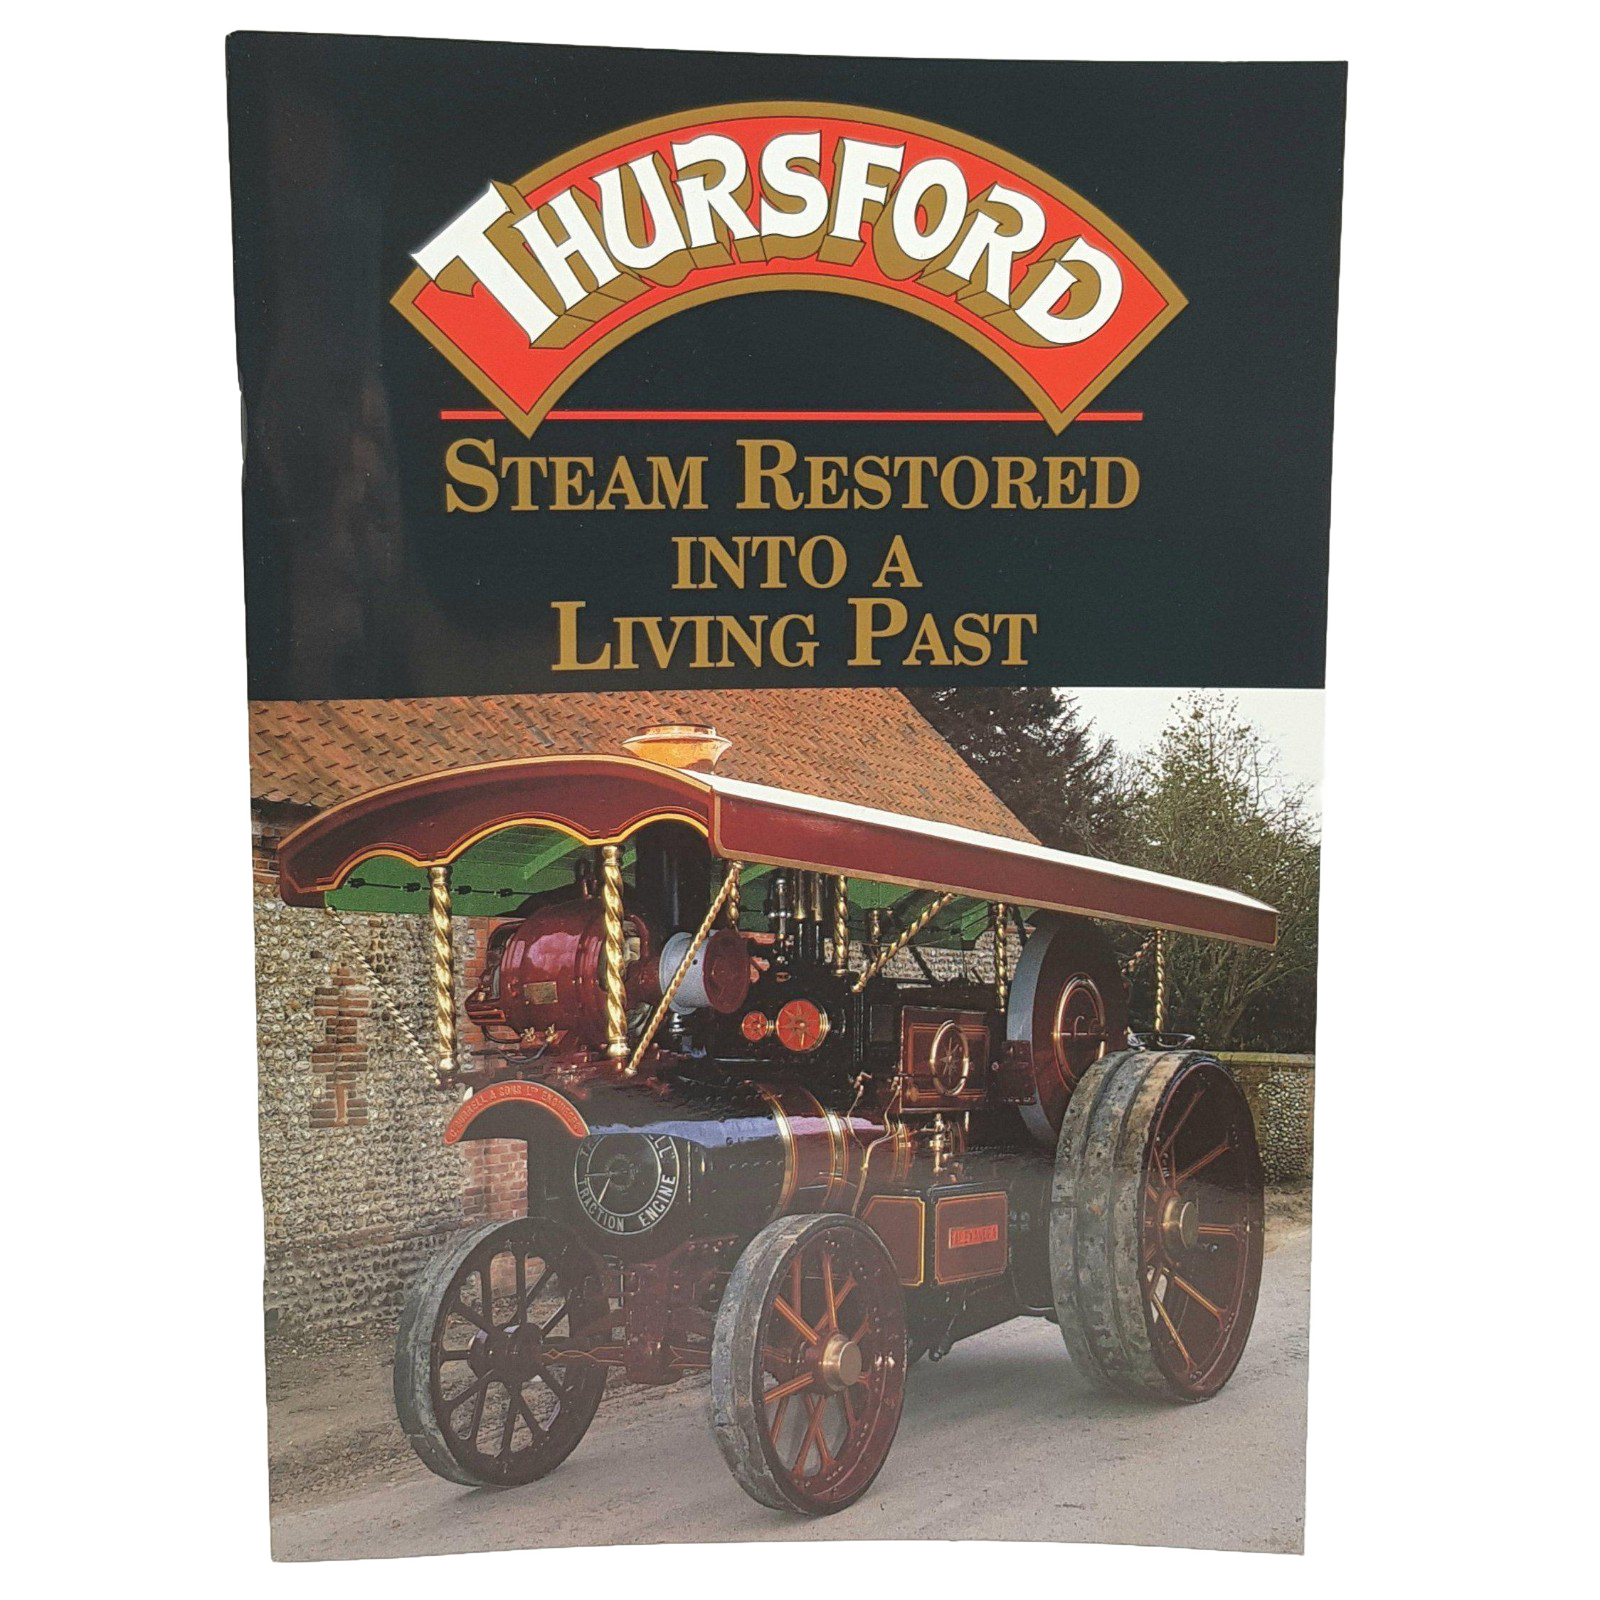 Brochure Thursford Steam Restored into a Living Past-Brochure-Thursford Enterprises Ltd.-Thursford Enterprises Ltd.